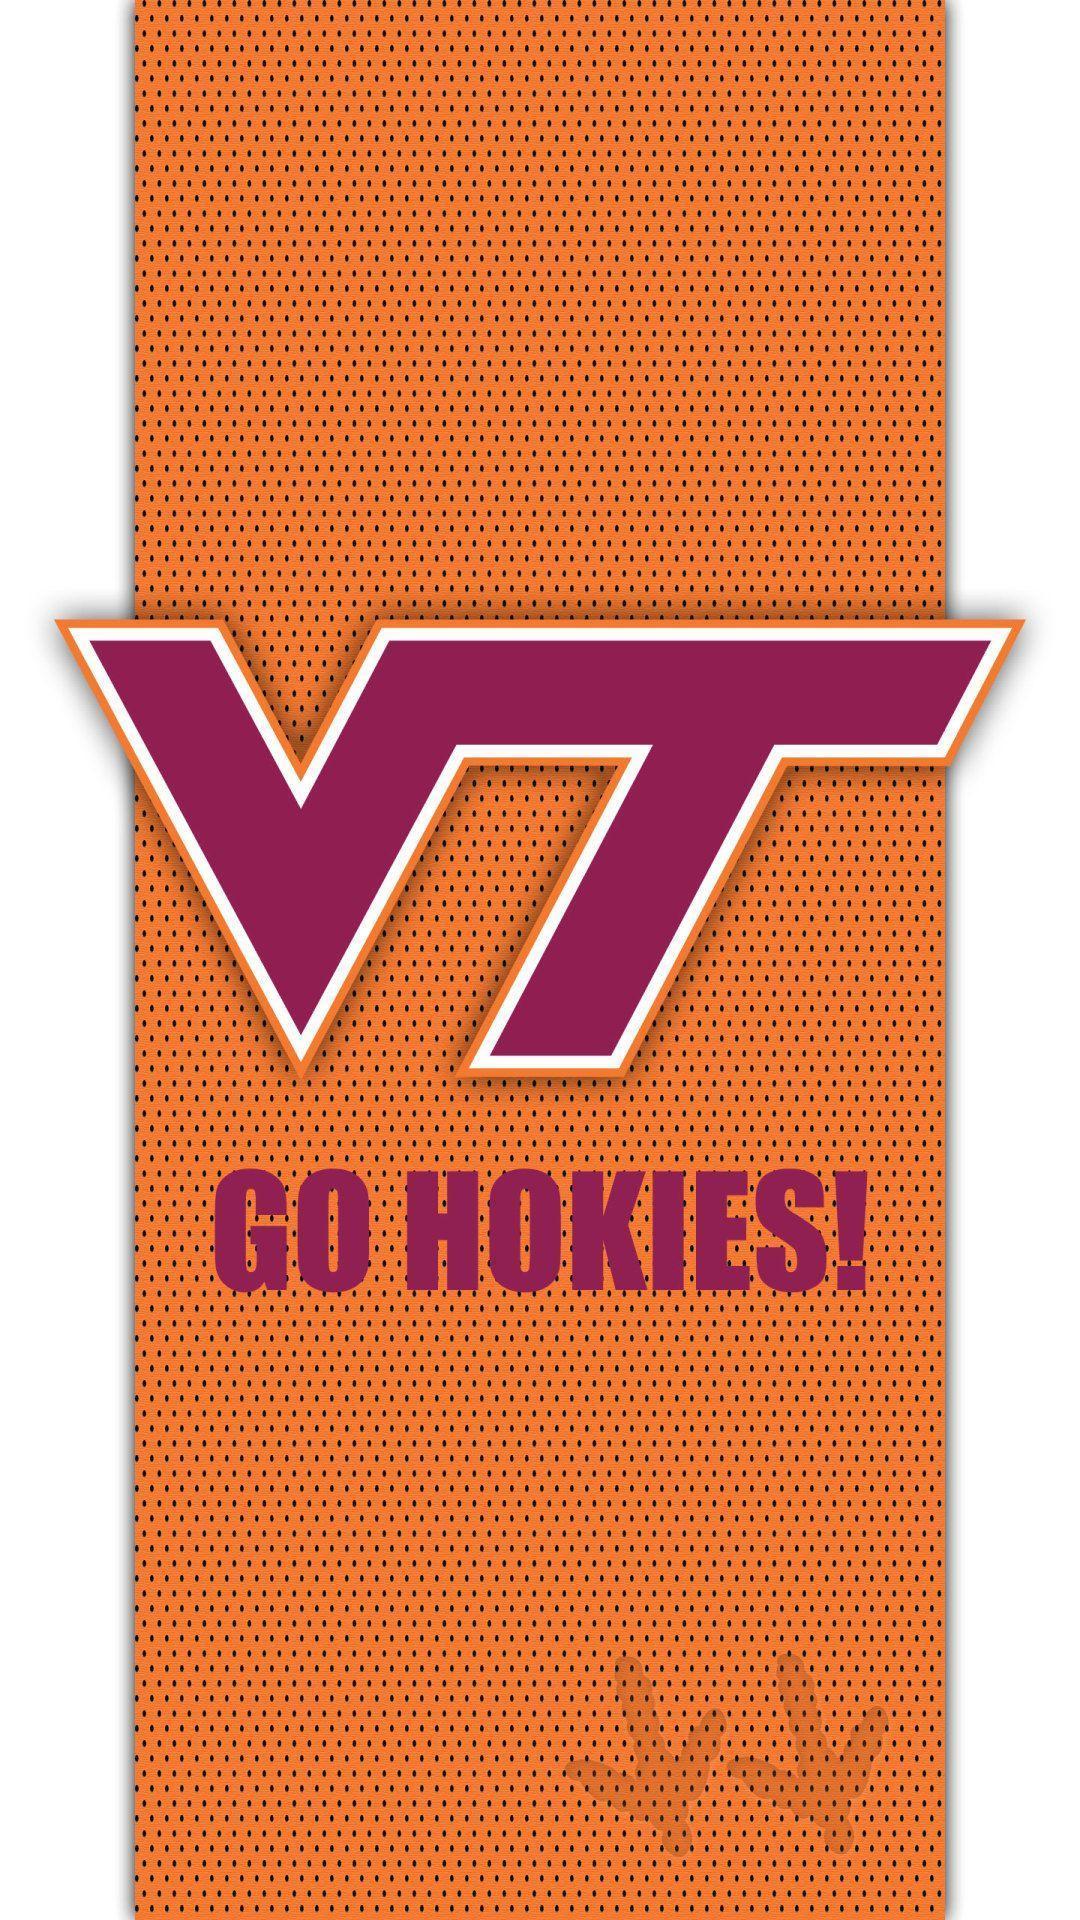 Virginia Tech Hokies A cell phone wallpaper based